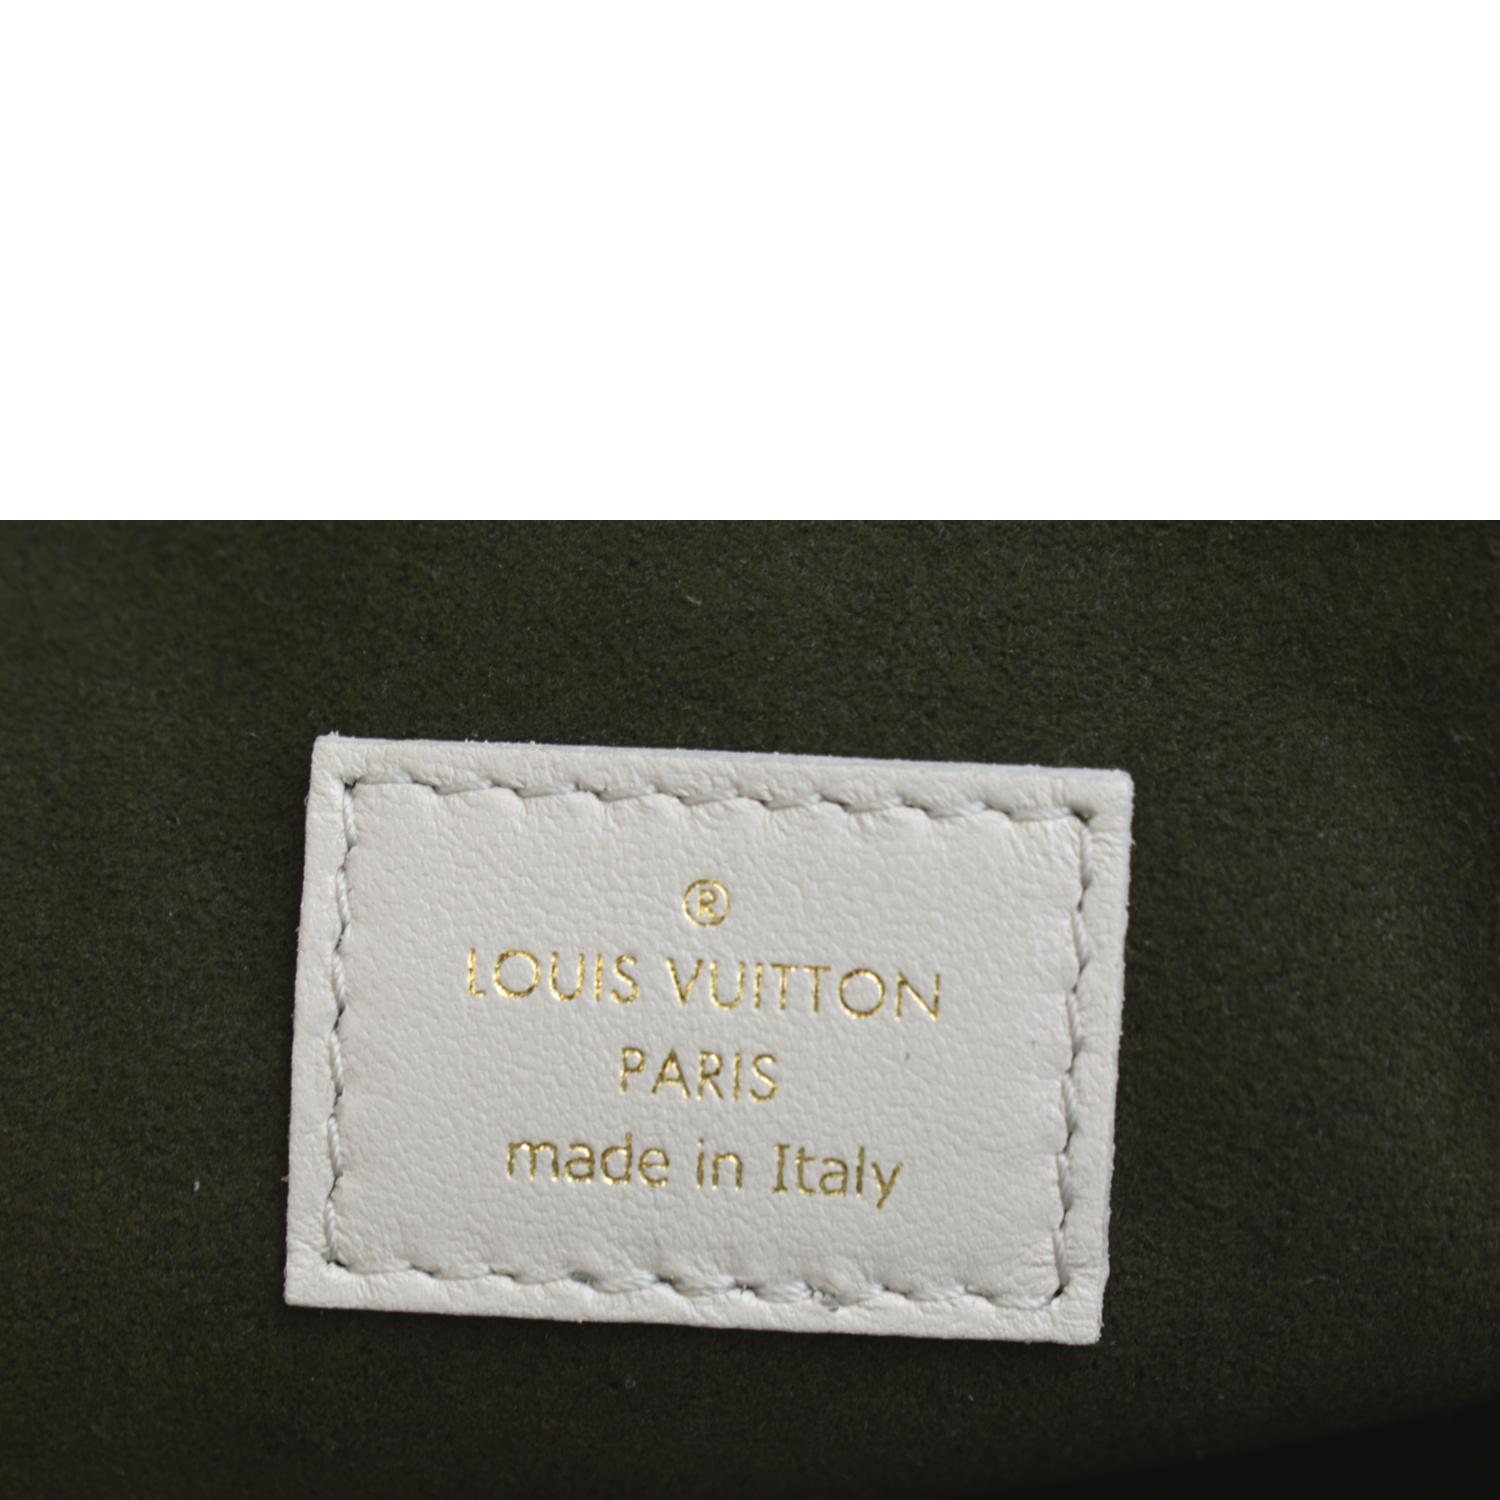 LOUIS VUITTON Coussin PM Monogram Embossed Shoulder Bag Taupe